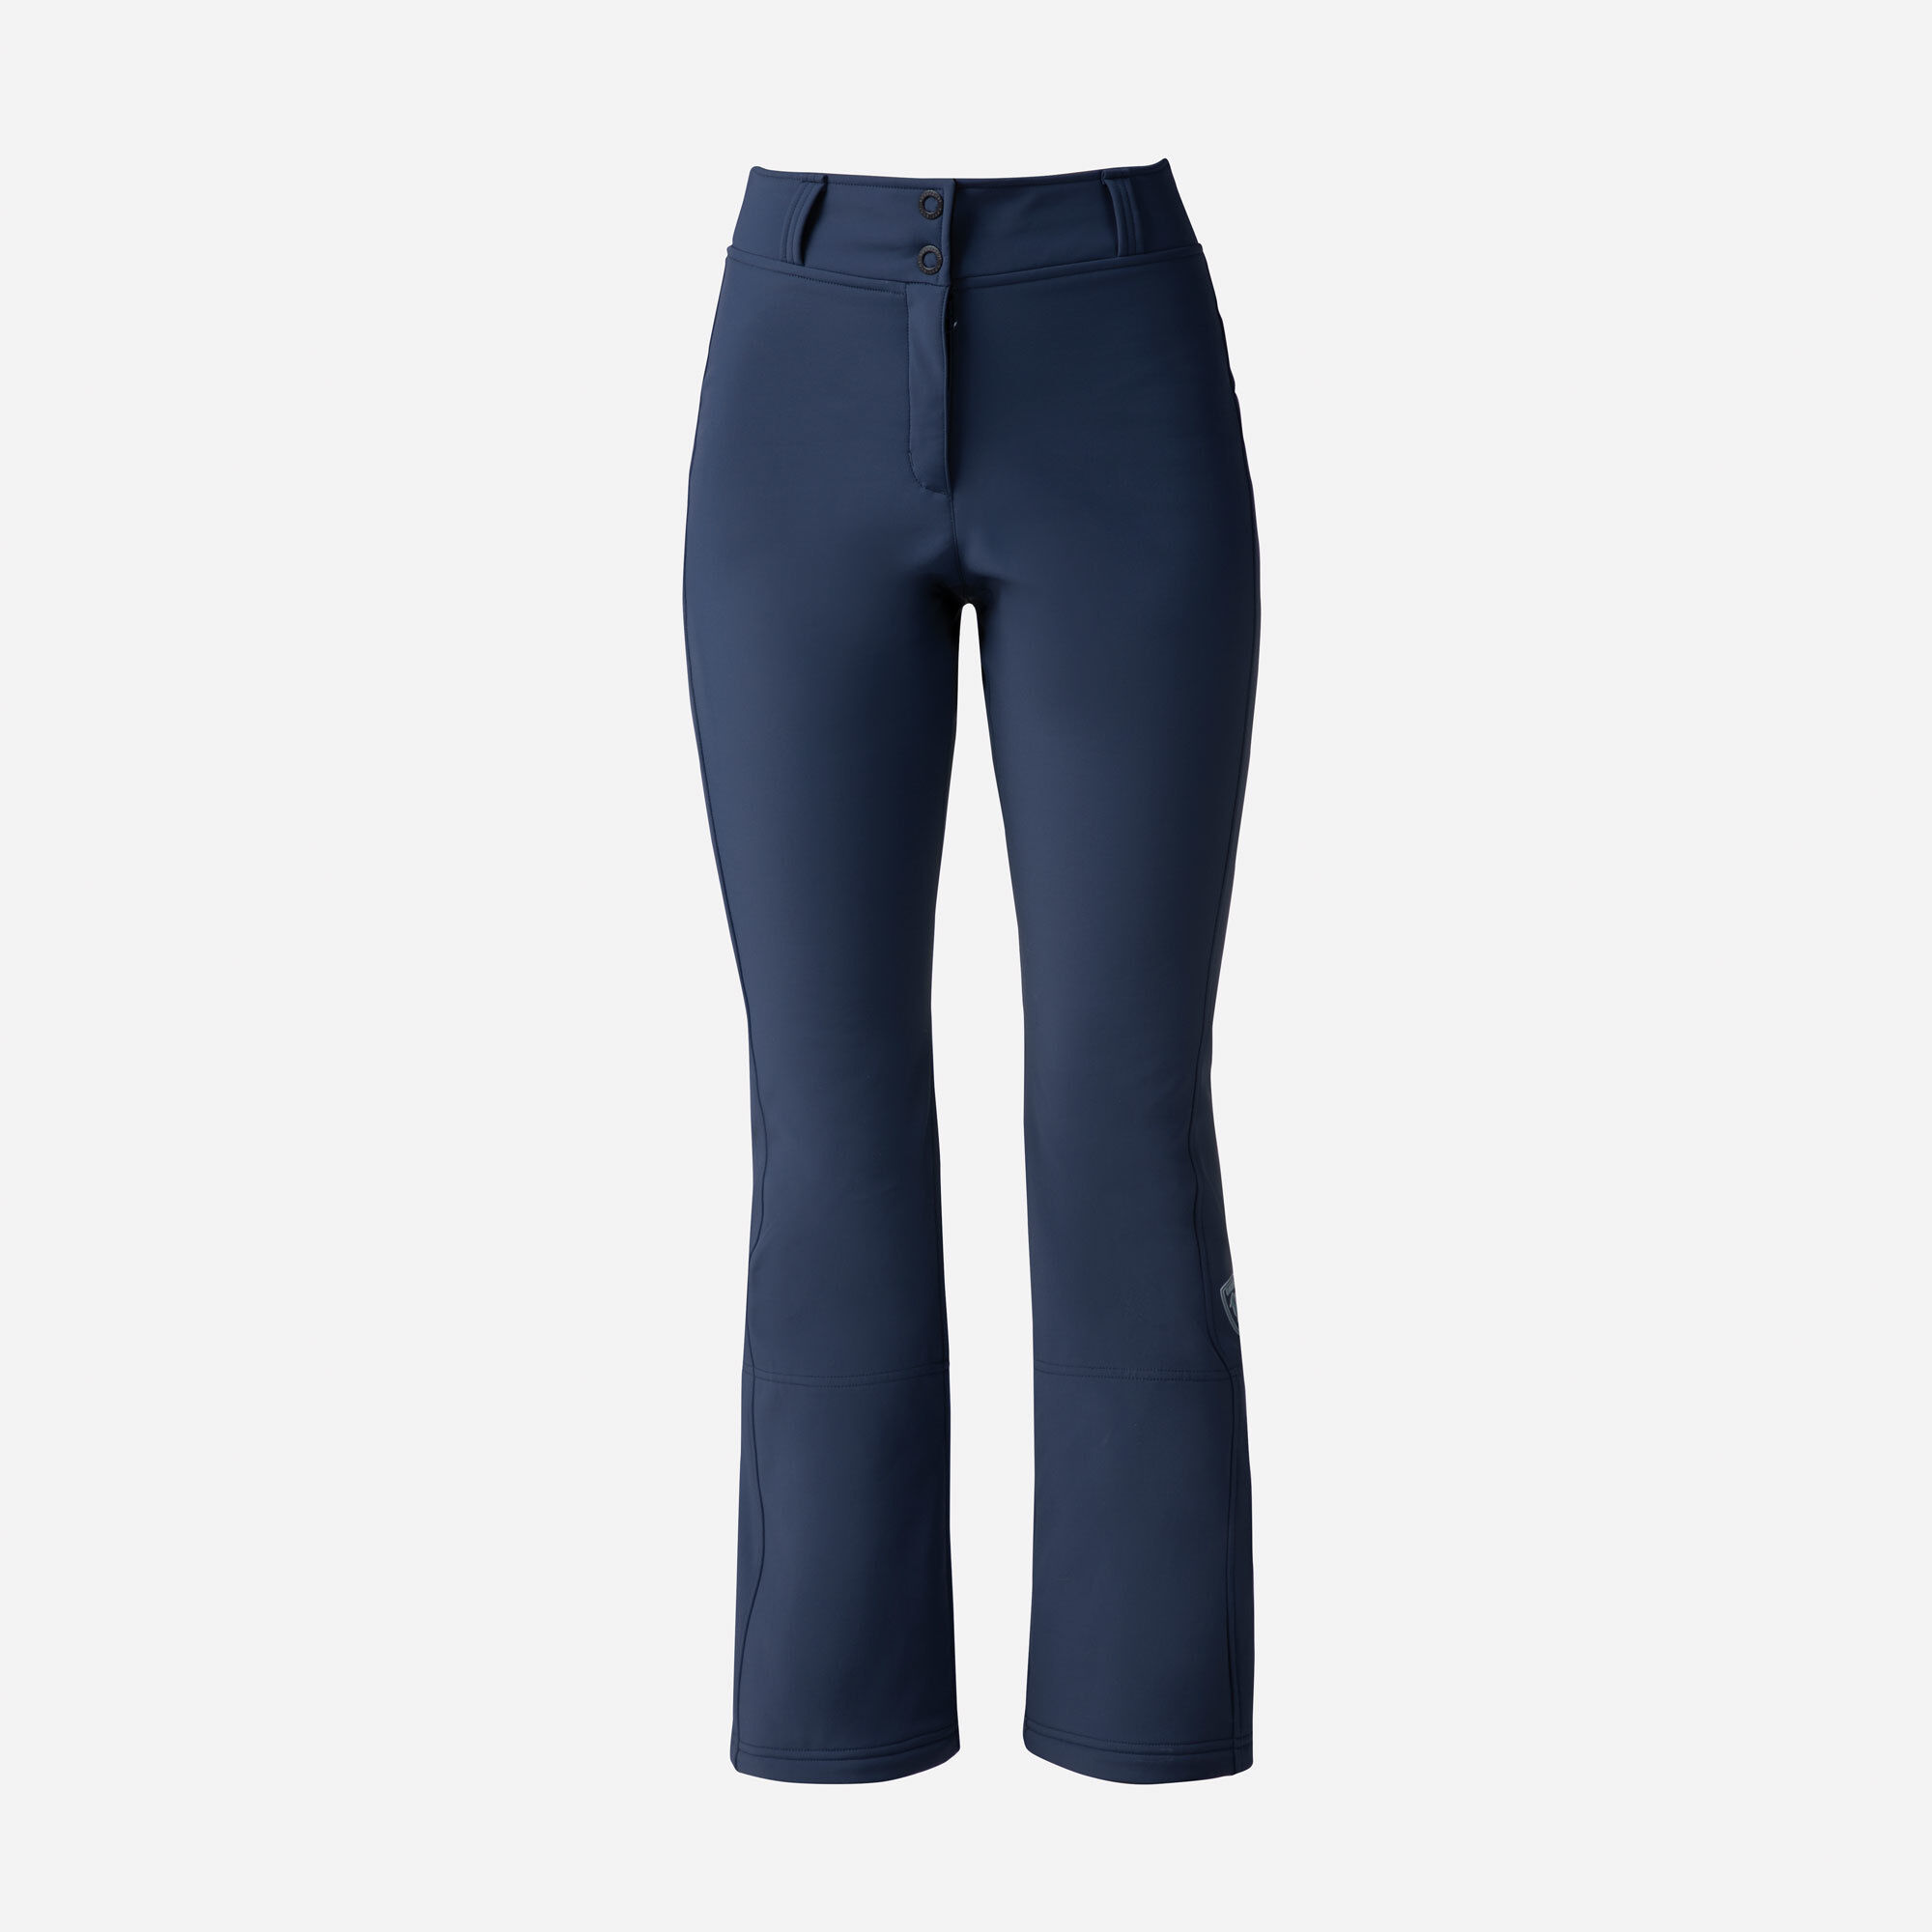 Women's Soft Shell Ski pants | Ski pants | Rossignol